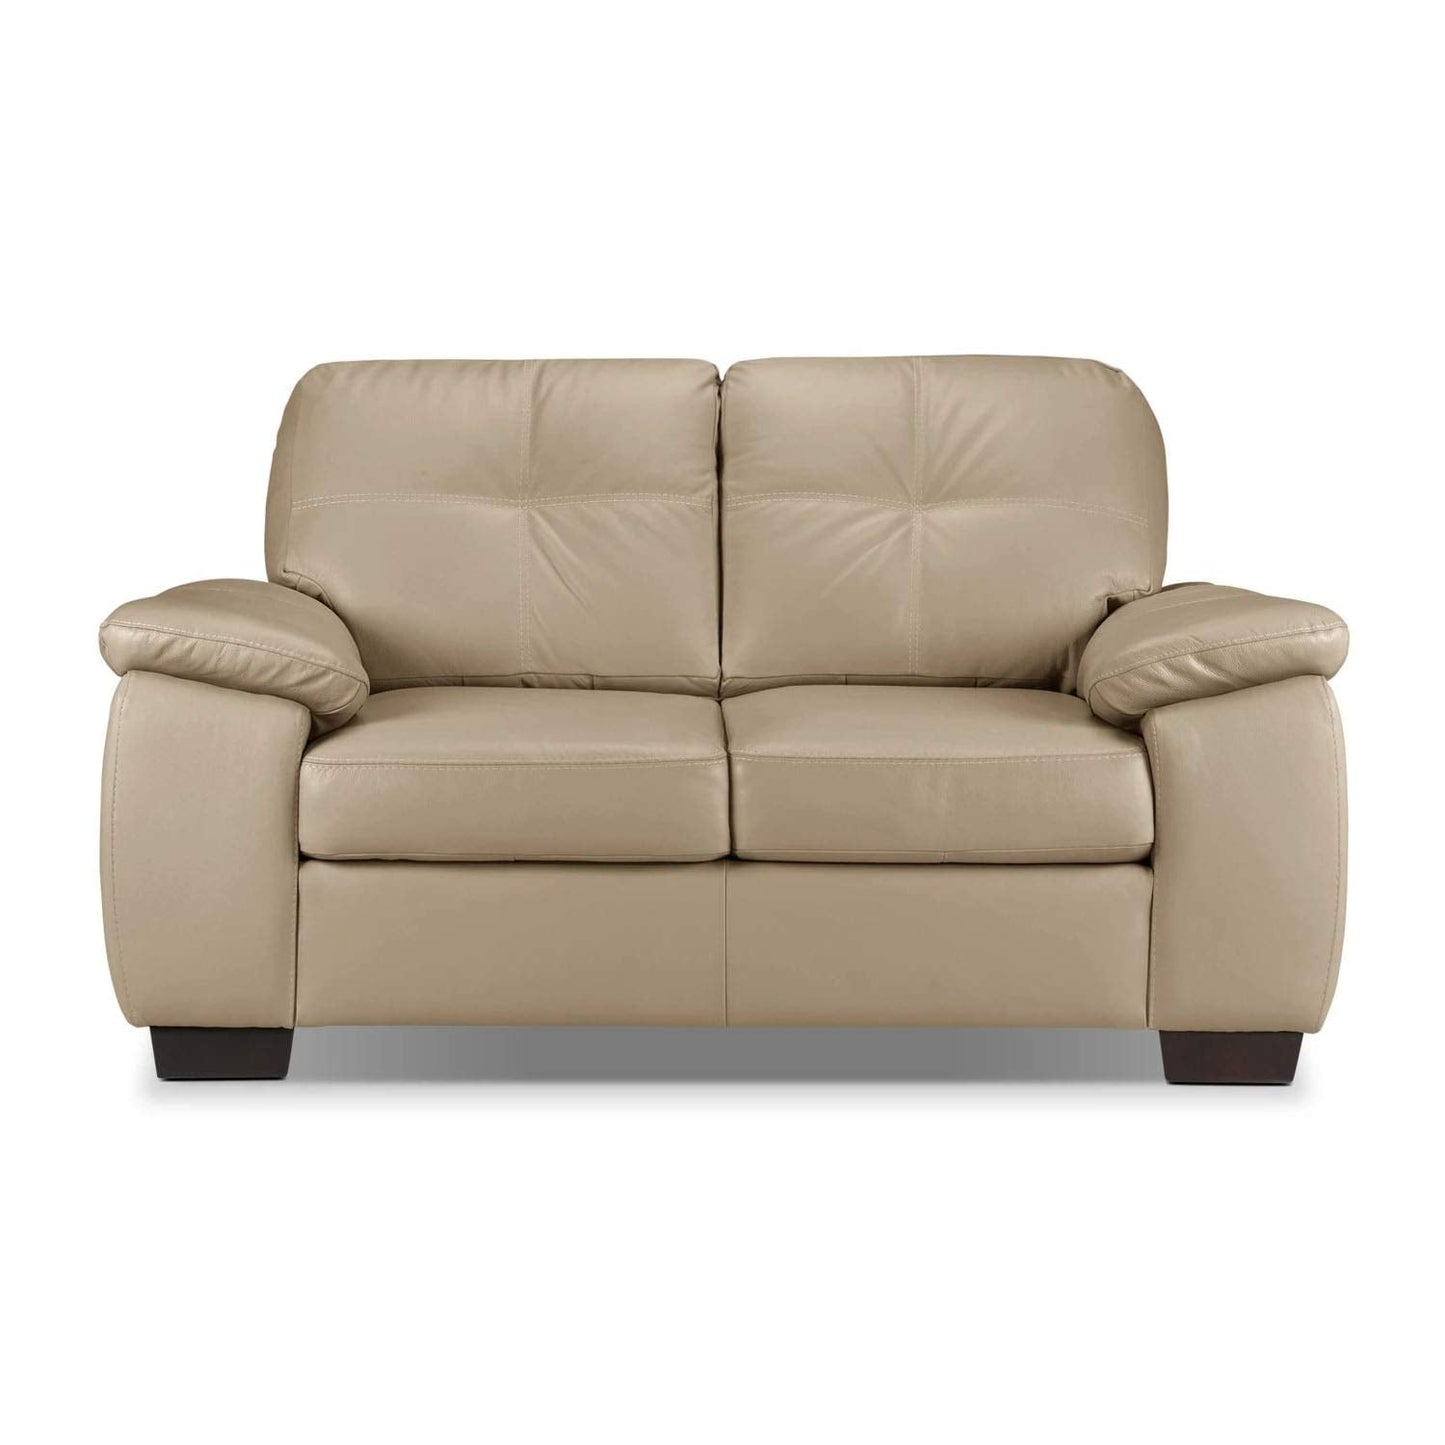 Torque India Antos 2 Seater Leatherette Sofa for Living Room | 2 Seater Leatherette Sofa - Torque India